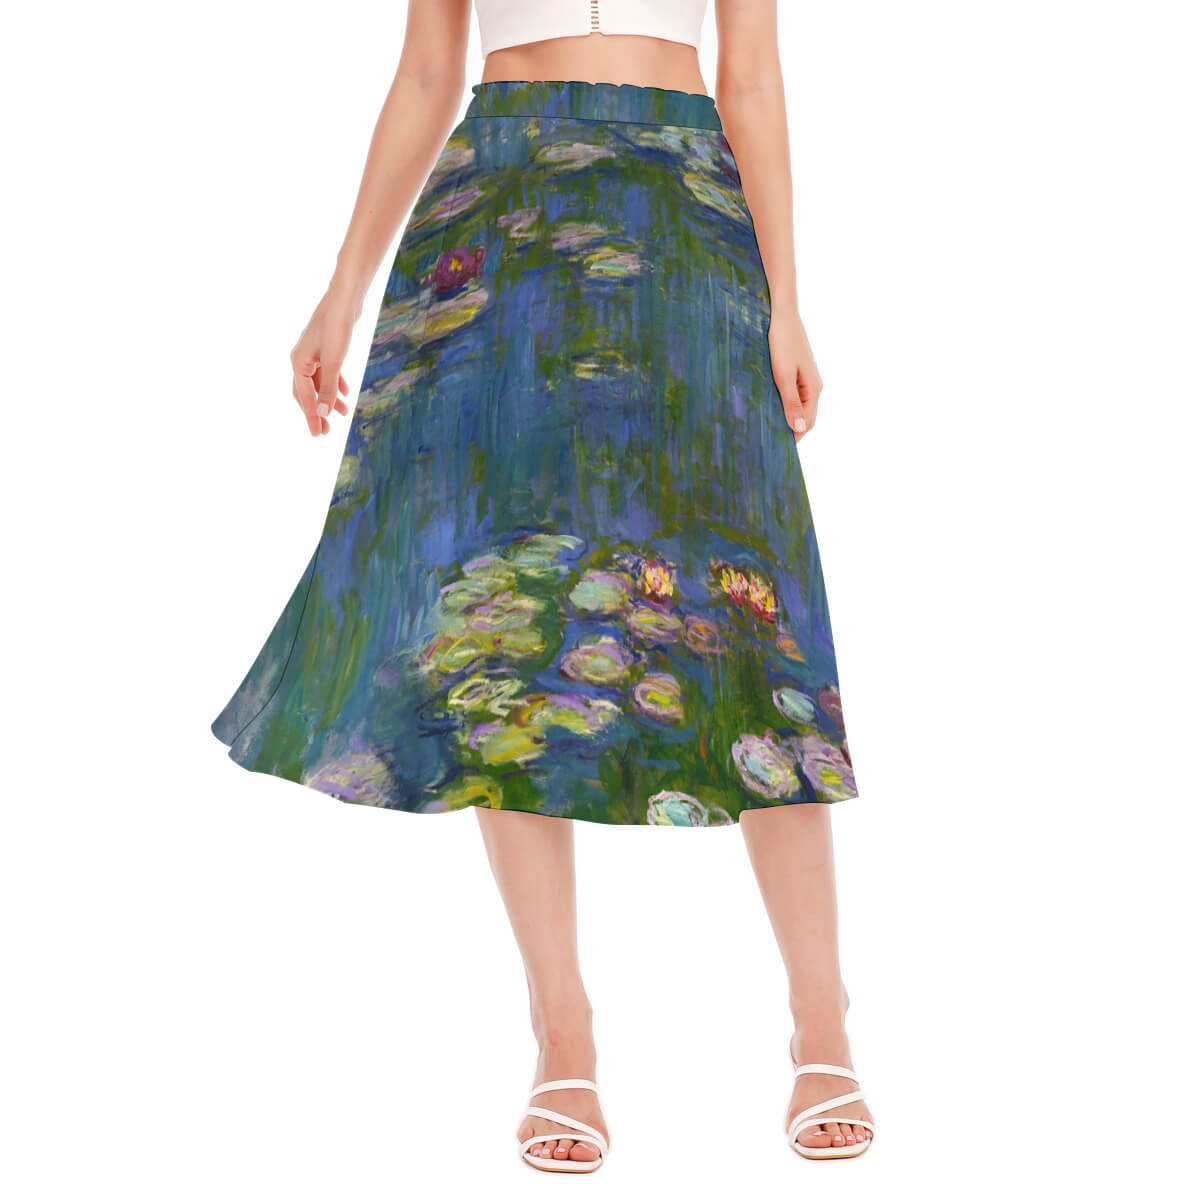 Artistic Claude Monet inspired chiffon skirt